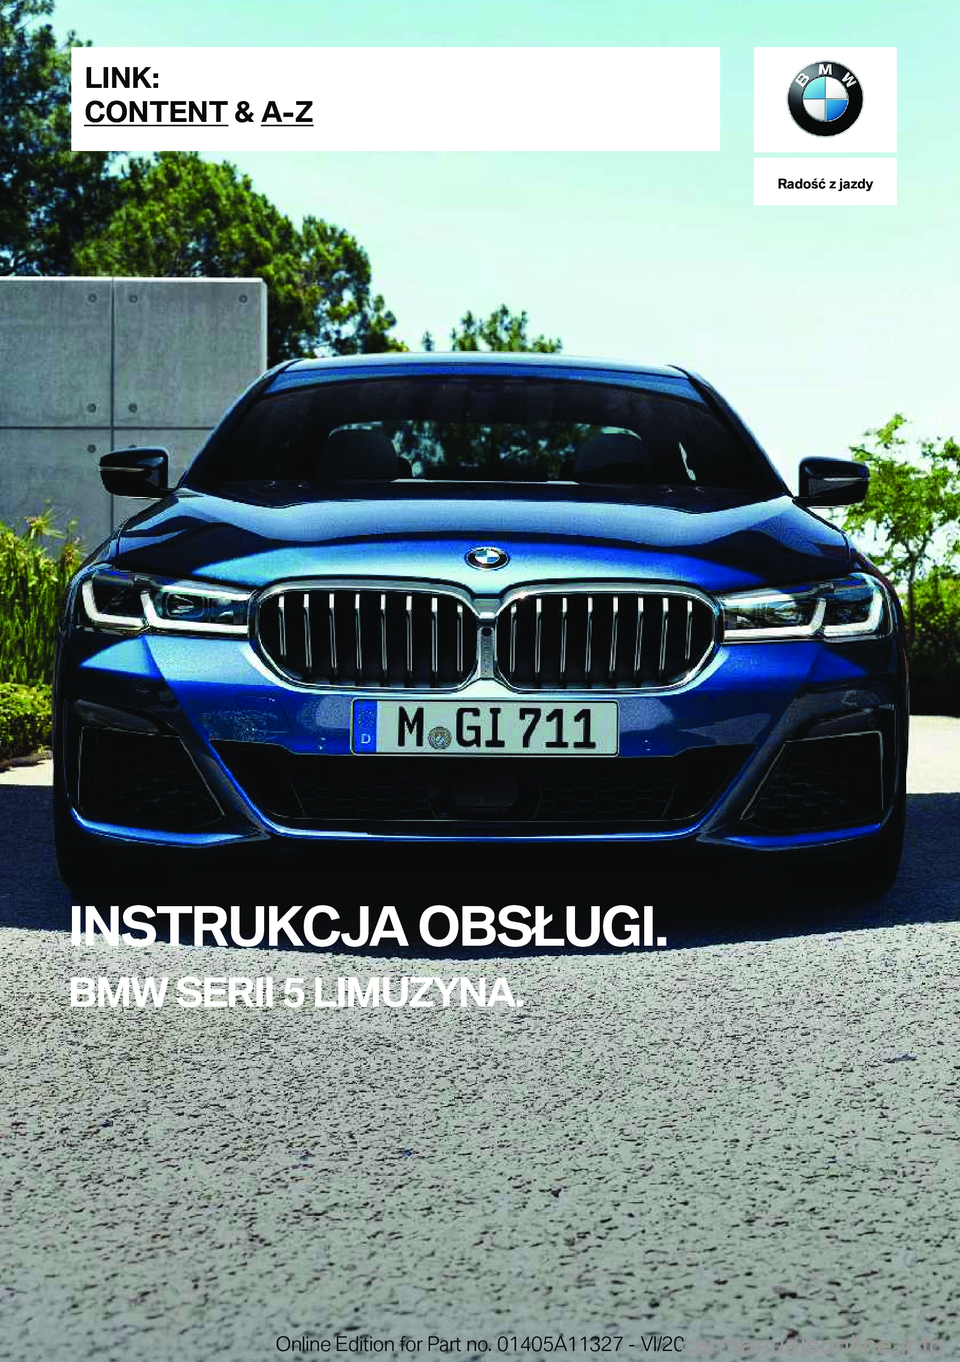 BMW 5 SERIES 2021  Instrukcja obsługi (in Polish) �R�a�d�o�ć��z��j�a�z�d�y
�I�N�S�T�R�U�K�C�J�A��O�B�S�Ł�U�G�I�.
�B�M�W��S�E�R�I�I��5��L�I�M�U�Z�Y�N�A�.�L�I�N�K�:
�C�O�N�T�E�N�T��&��A�-�Z�O�n�l�i�n�e��E�d�i�t�i�o�n��f�o�r��P�a�r�t��n�